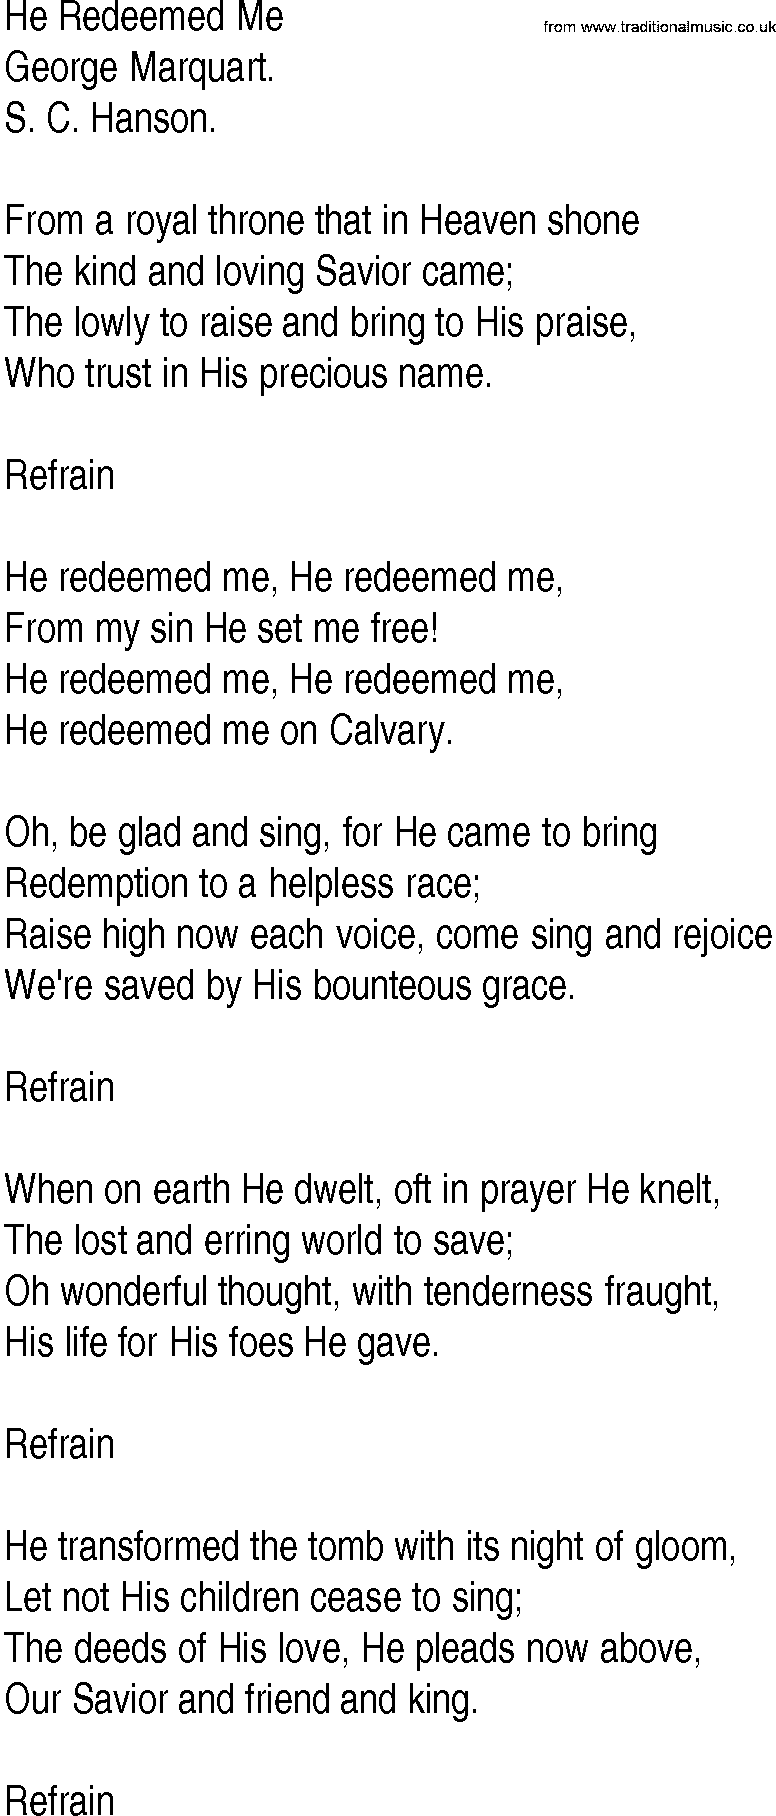 Hymn and Gospel Song: He Redeemed Me by George Marquart lyrics